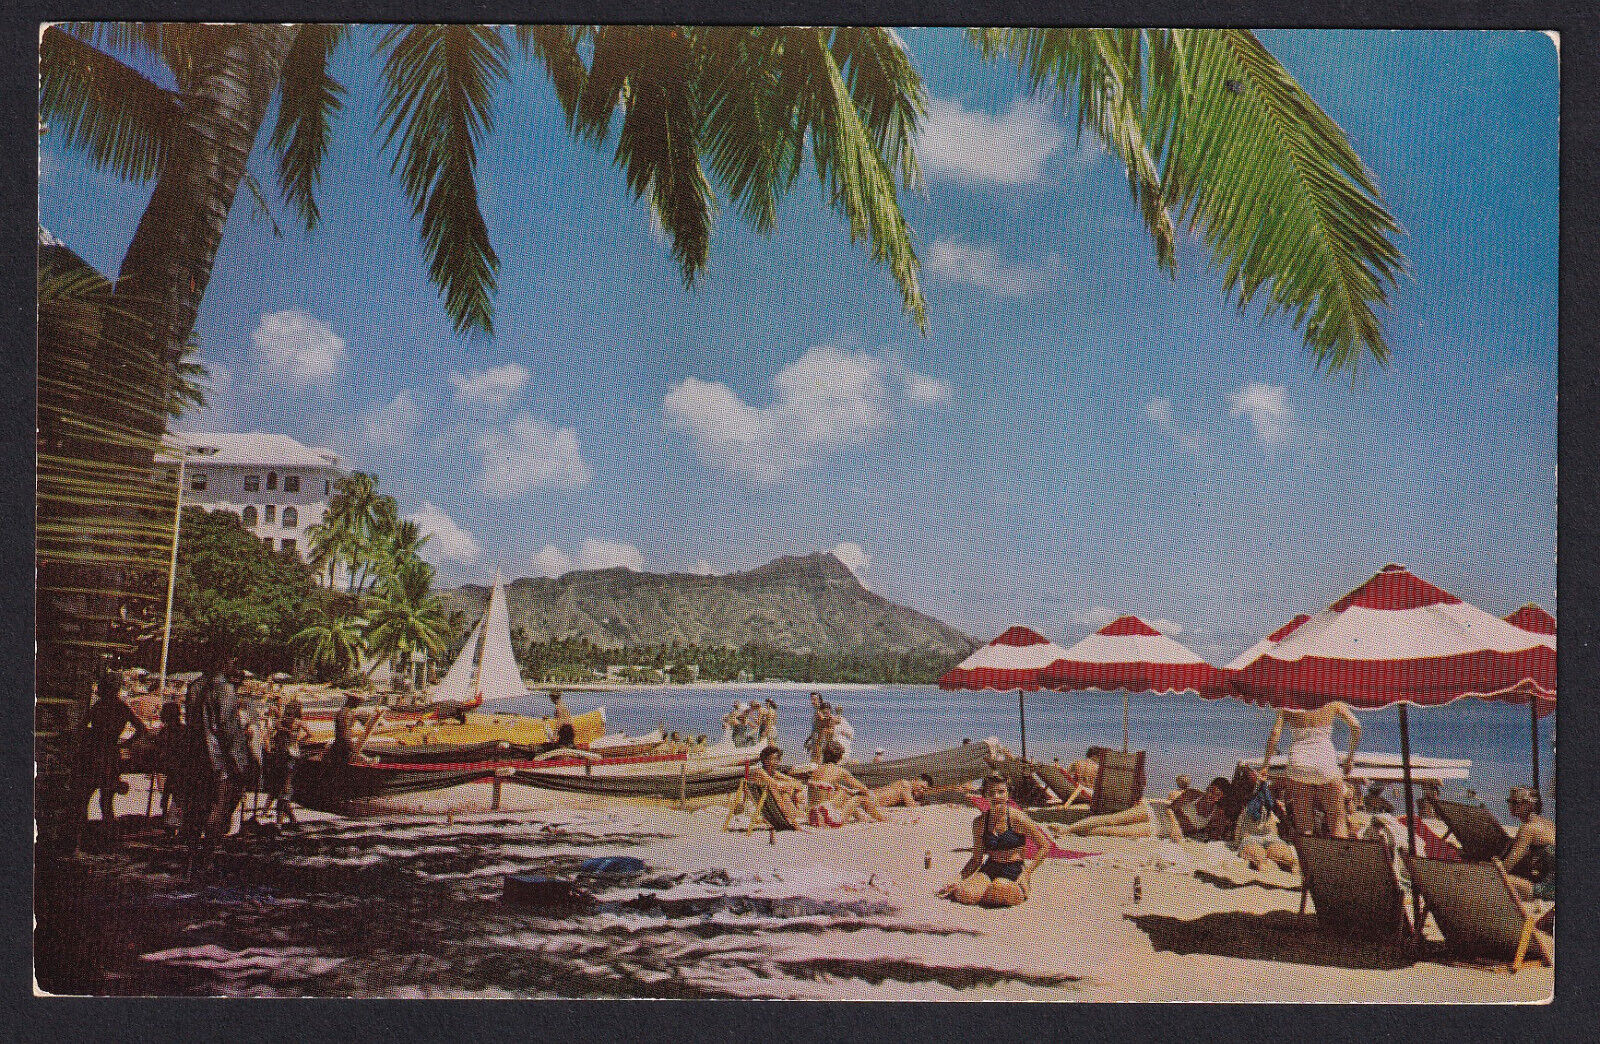 Hawaii-HI-Waikiki Beach-Diamond Head-People-Umbrellas-Boats-Vintage Postcard